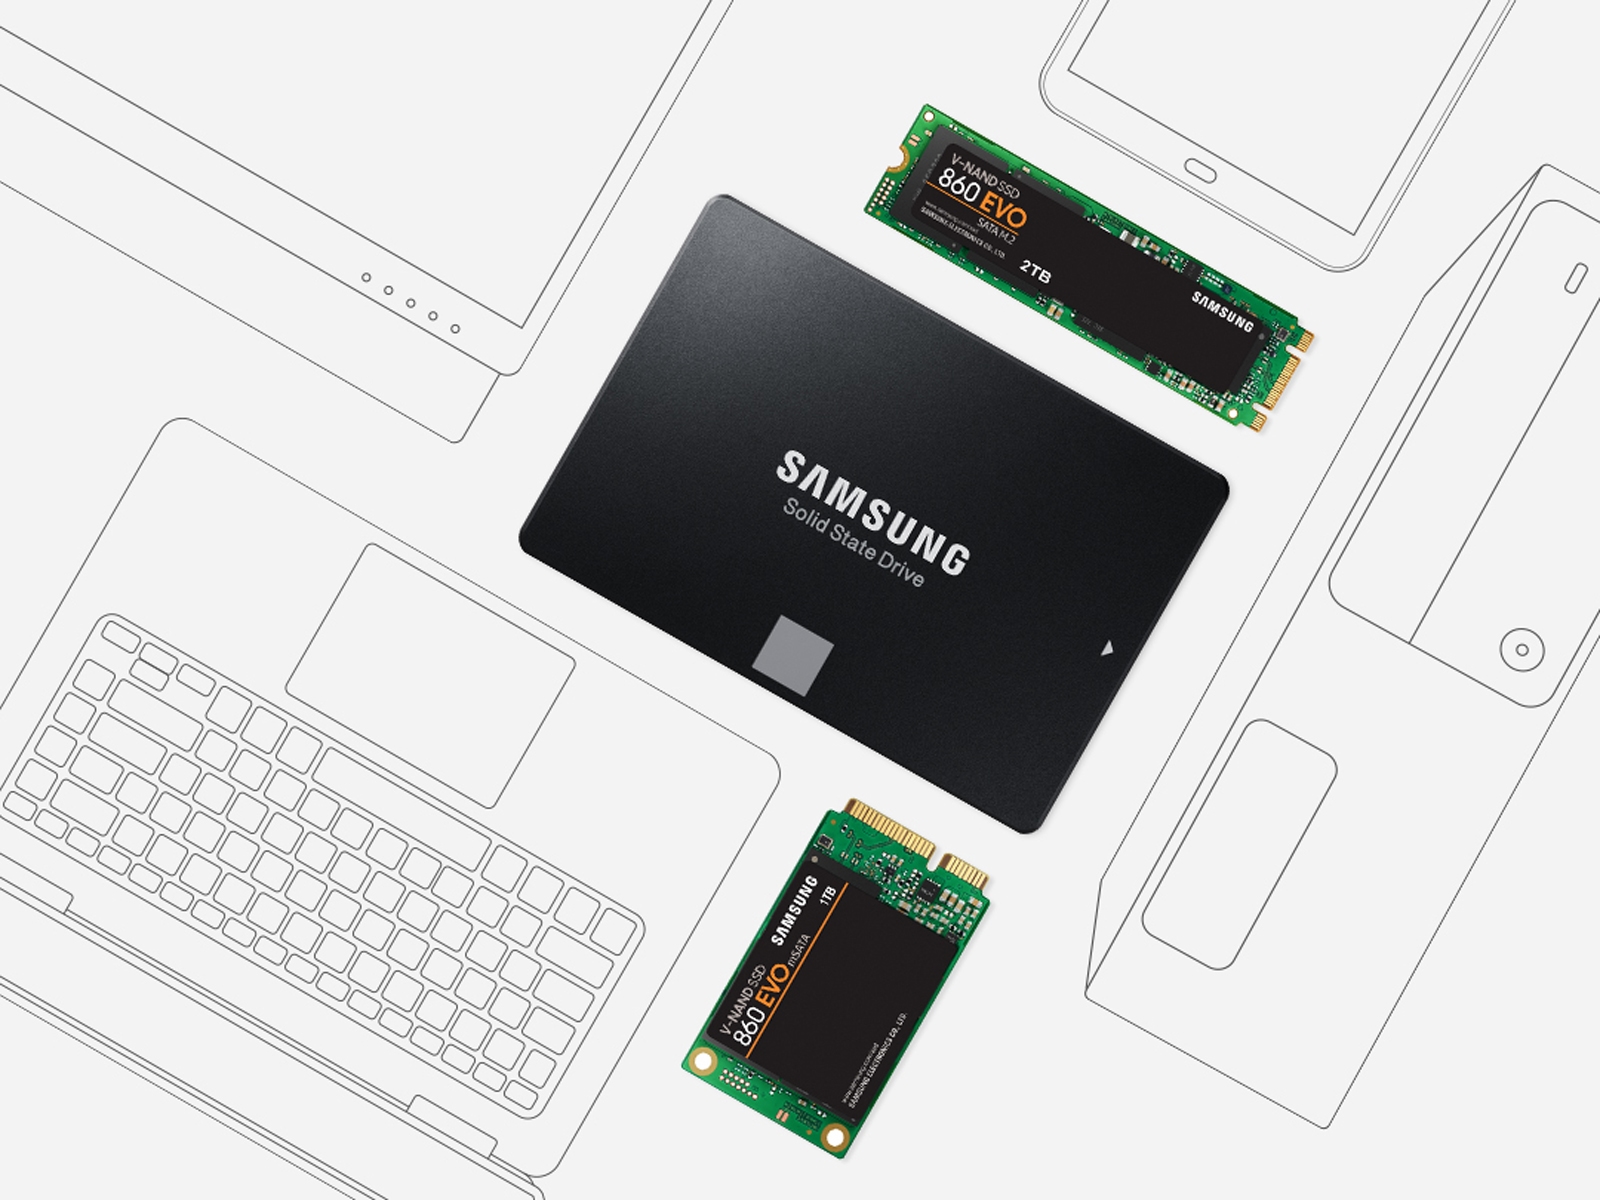  Samsung SSD 860 EVO 4TB 2.5 Inch SATA III Internal SSD  (MZ-76E4T0B/AM) : Electronics